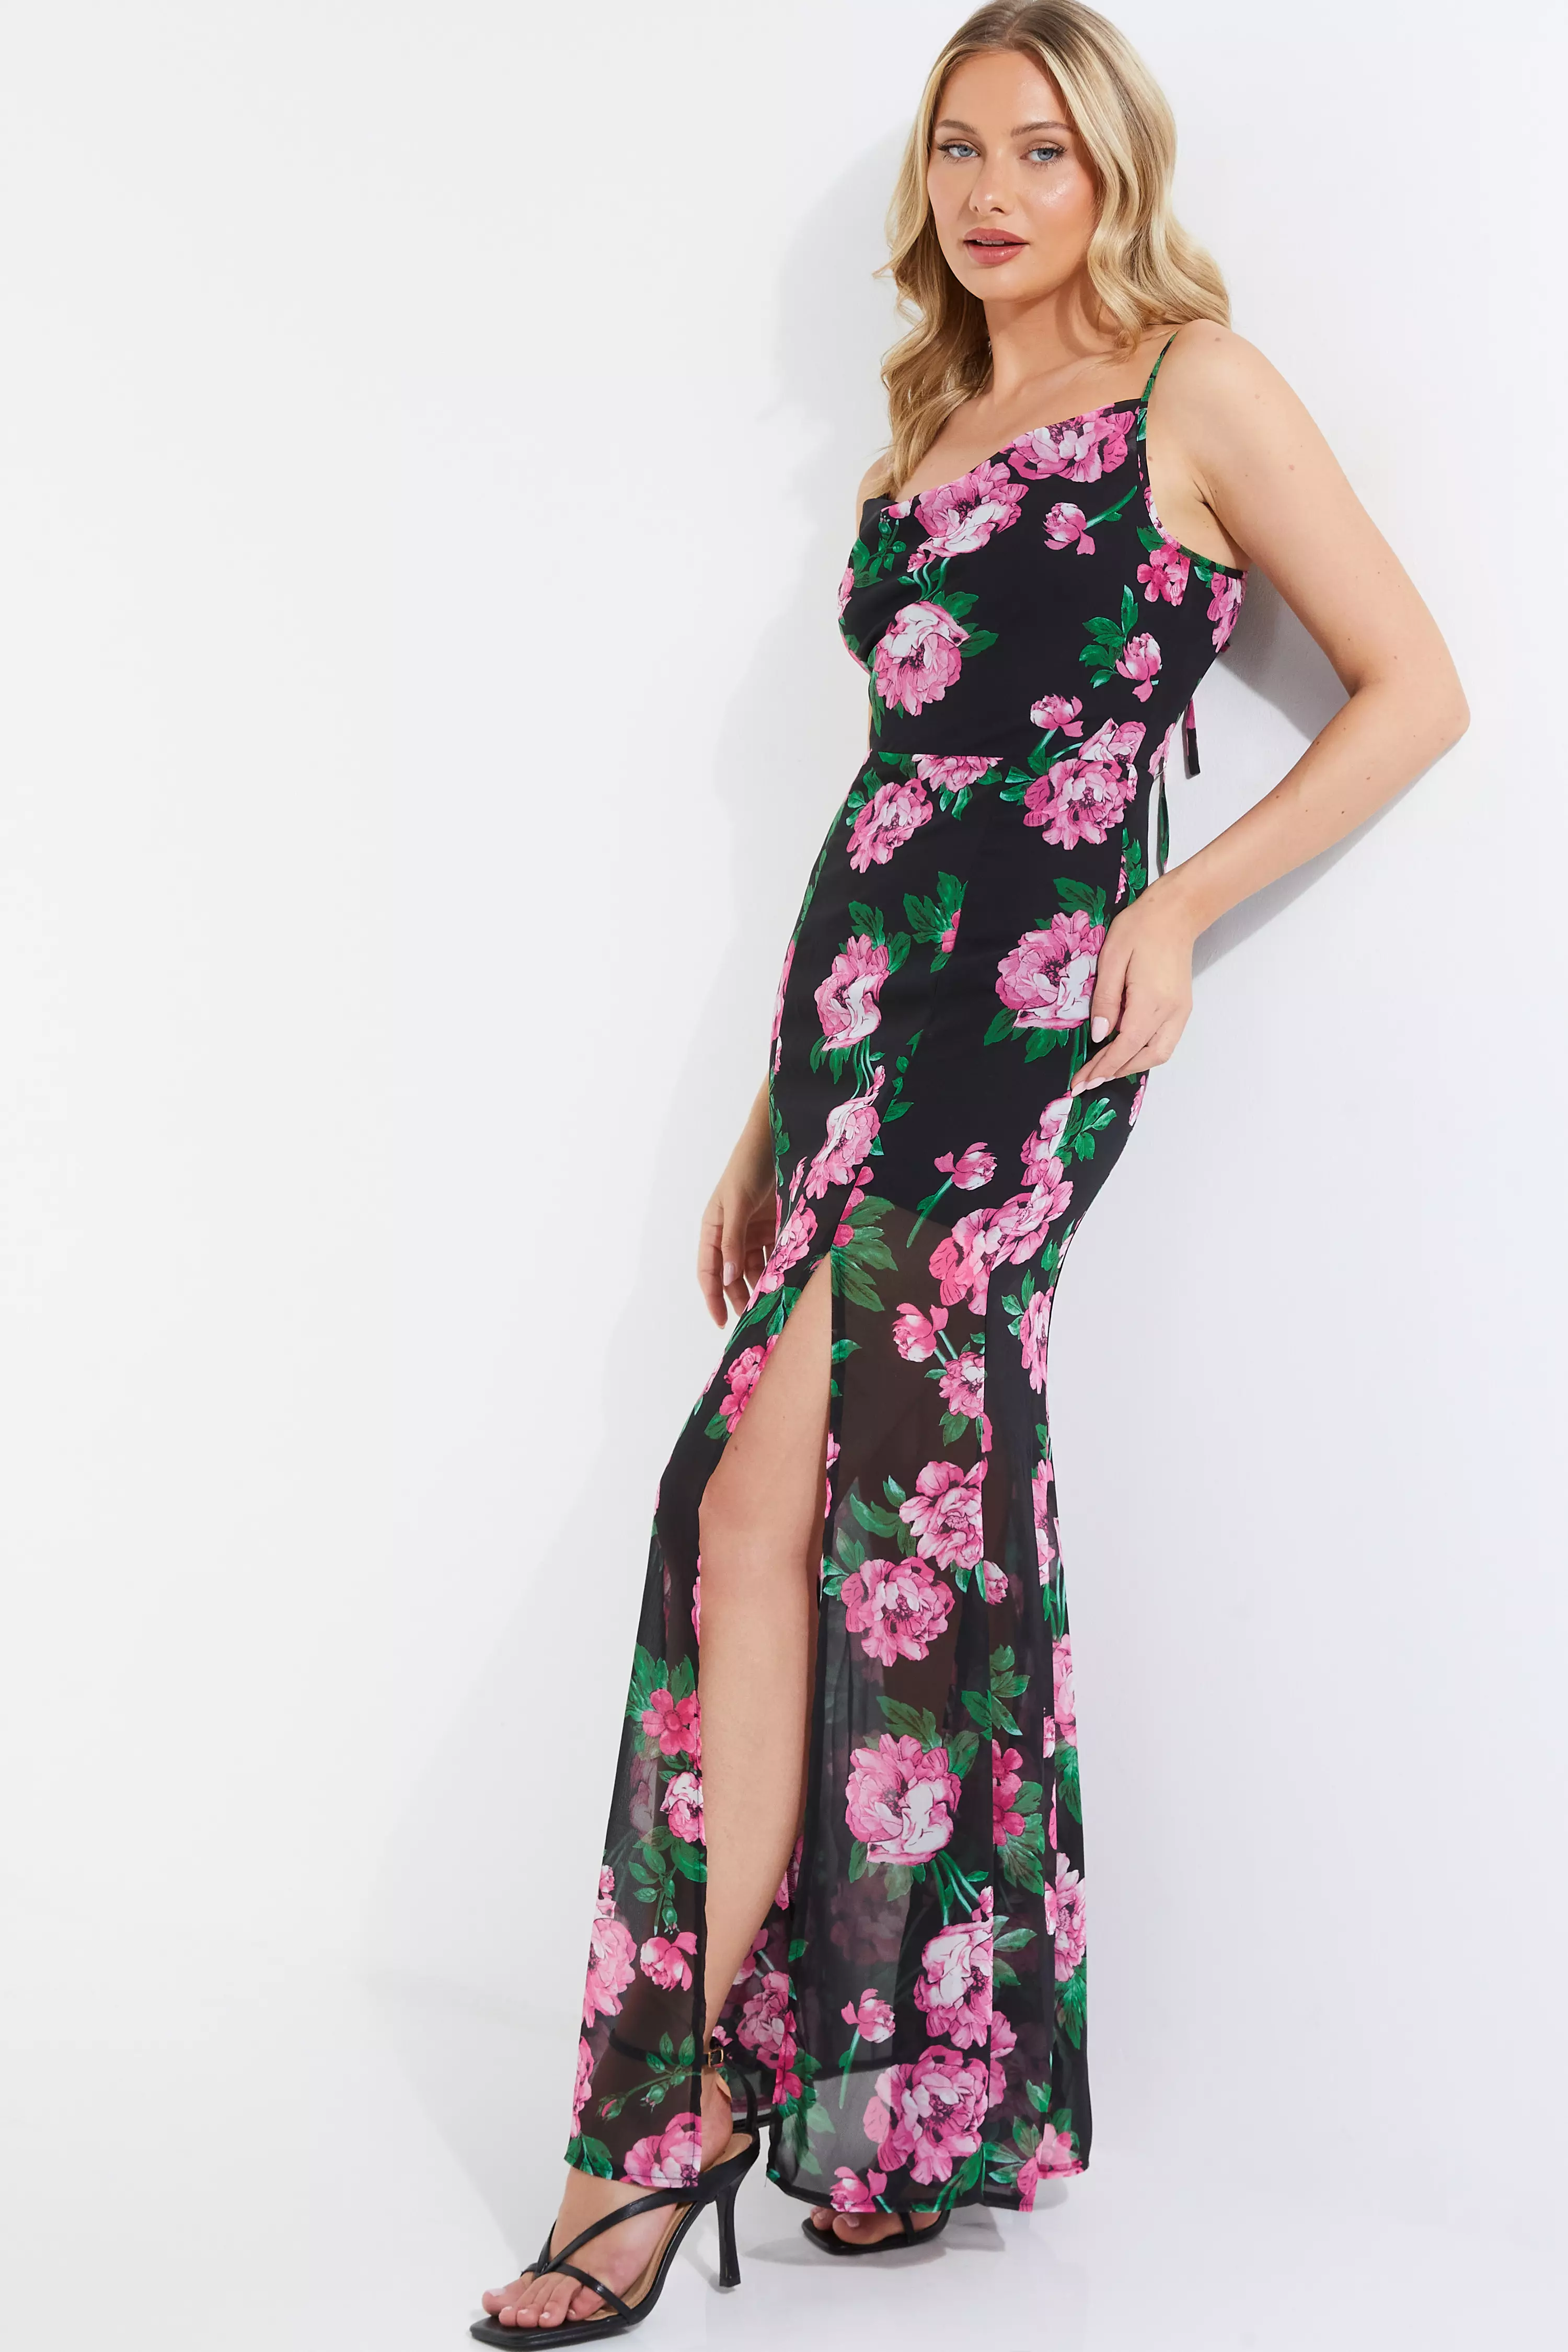 Black Floral Mesh Maxi Dress - QUIZ Clothing